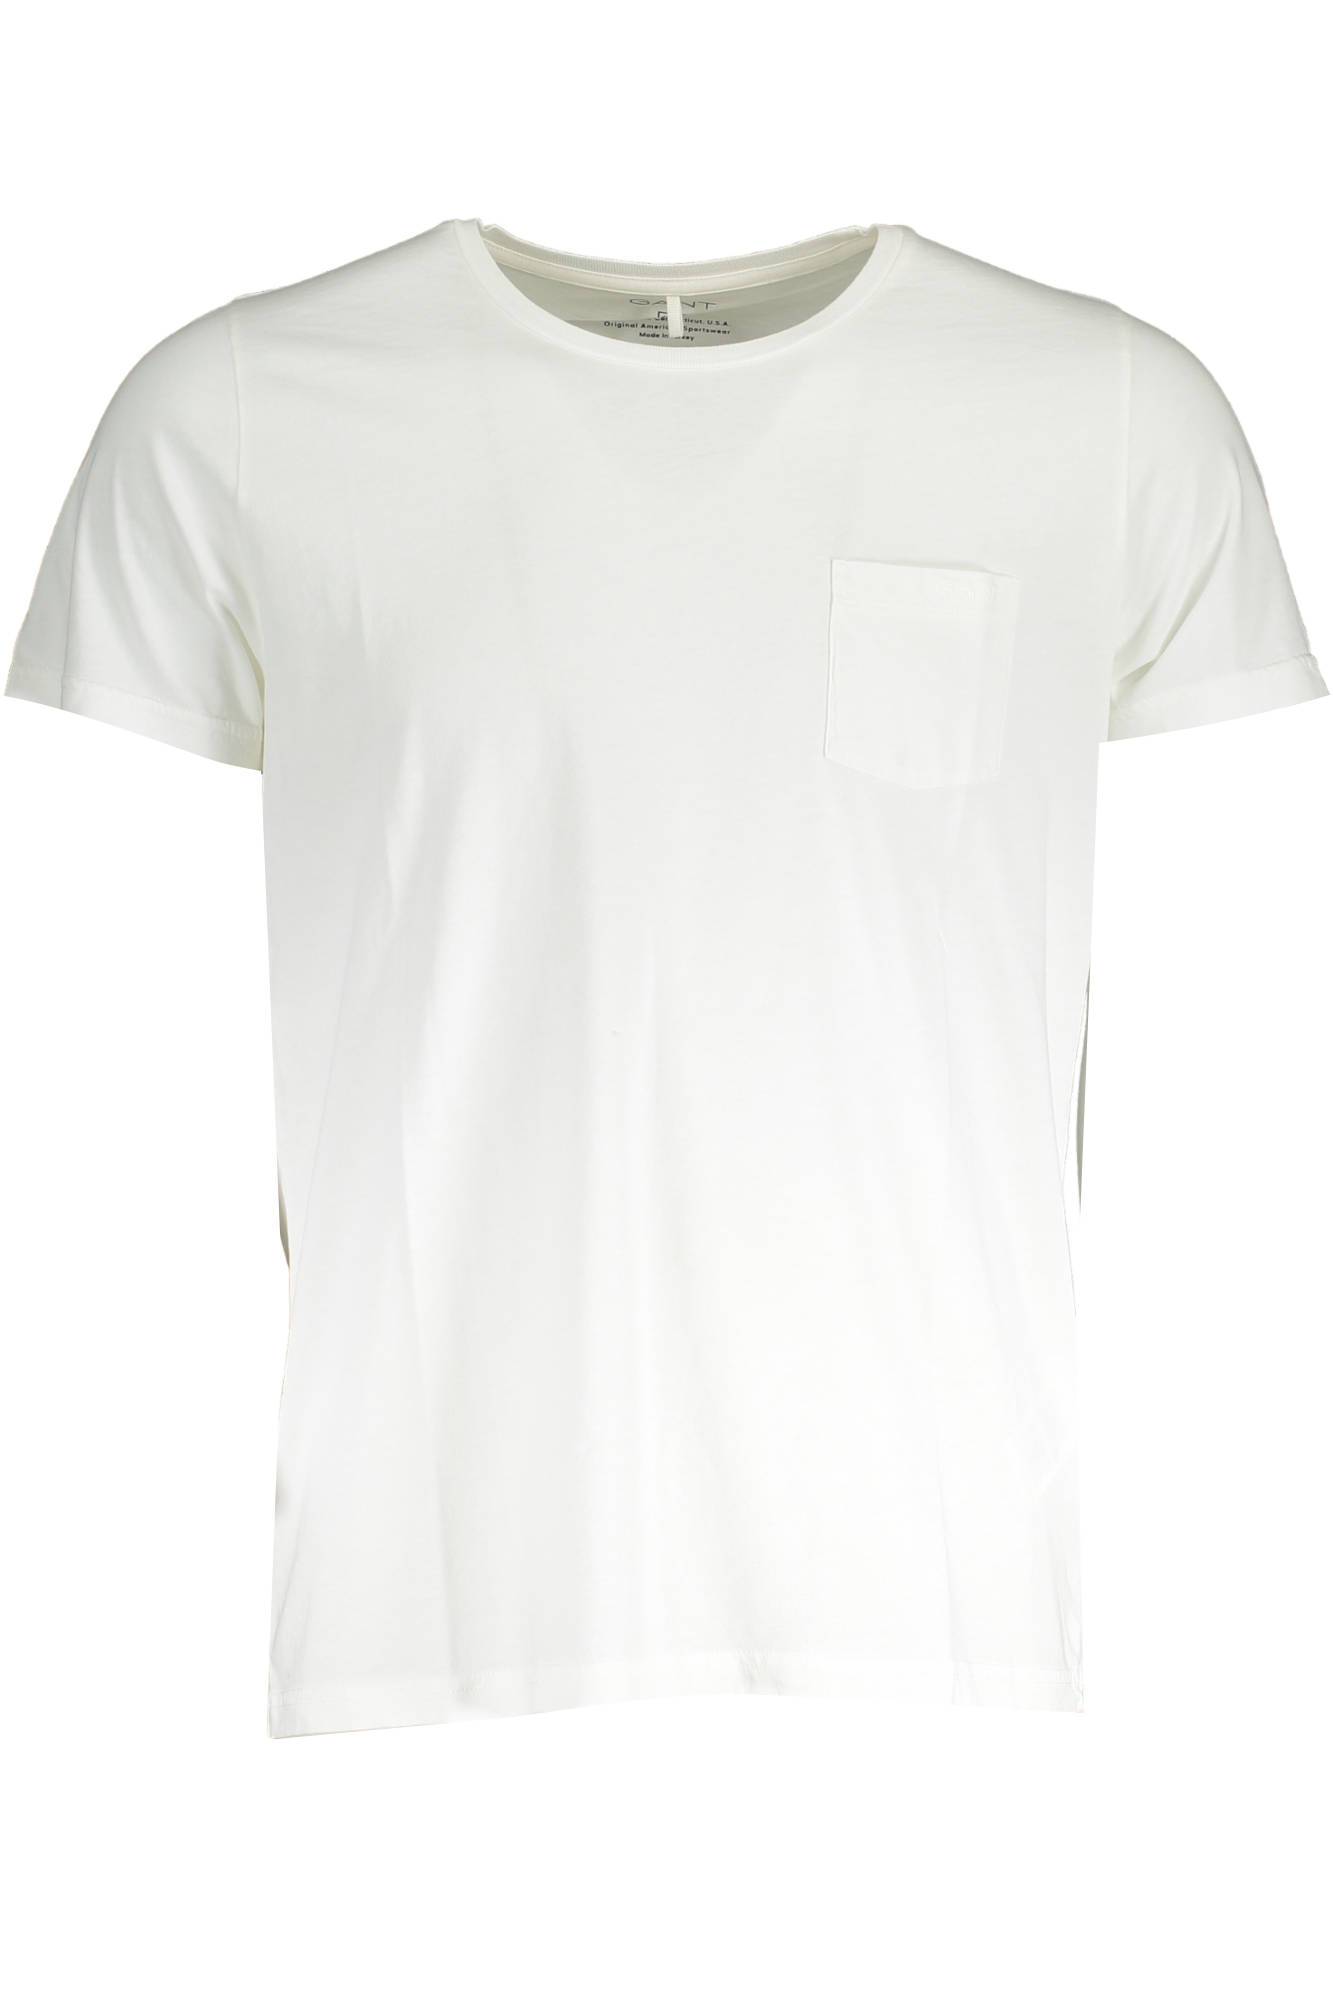 Tričko GANT tričko s krátkým rukávem BIANCO